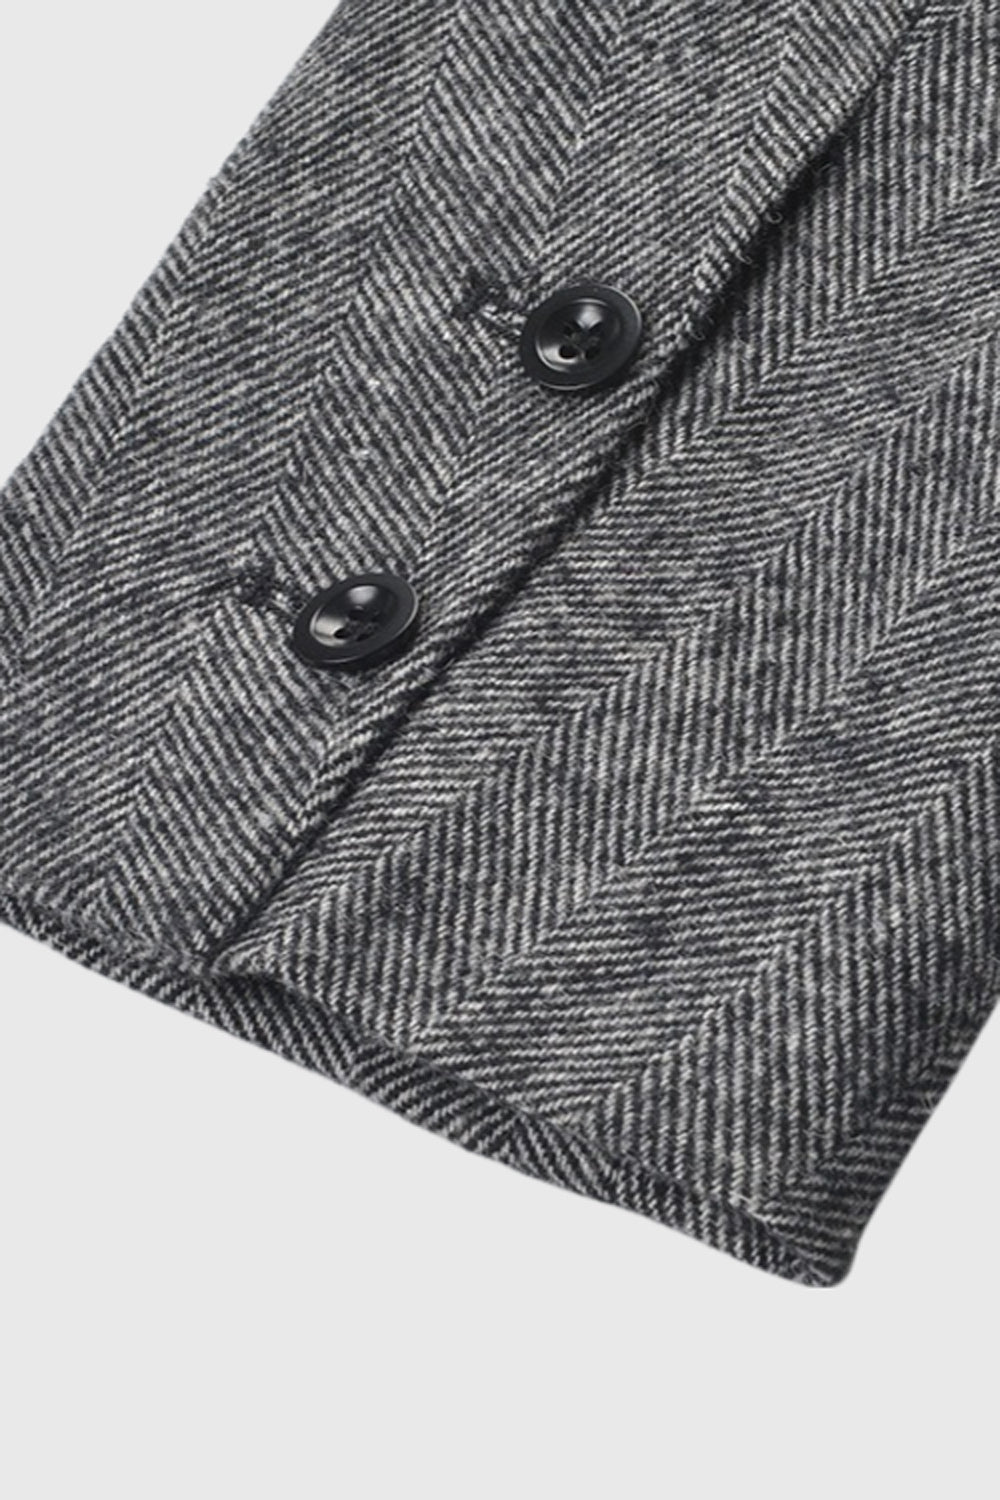 Short Textured Jacket with Pockets - Grey